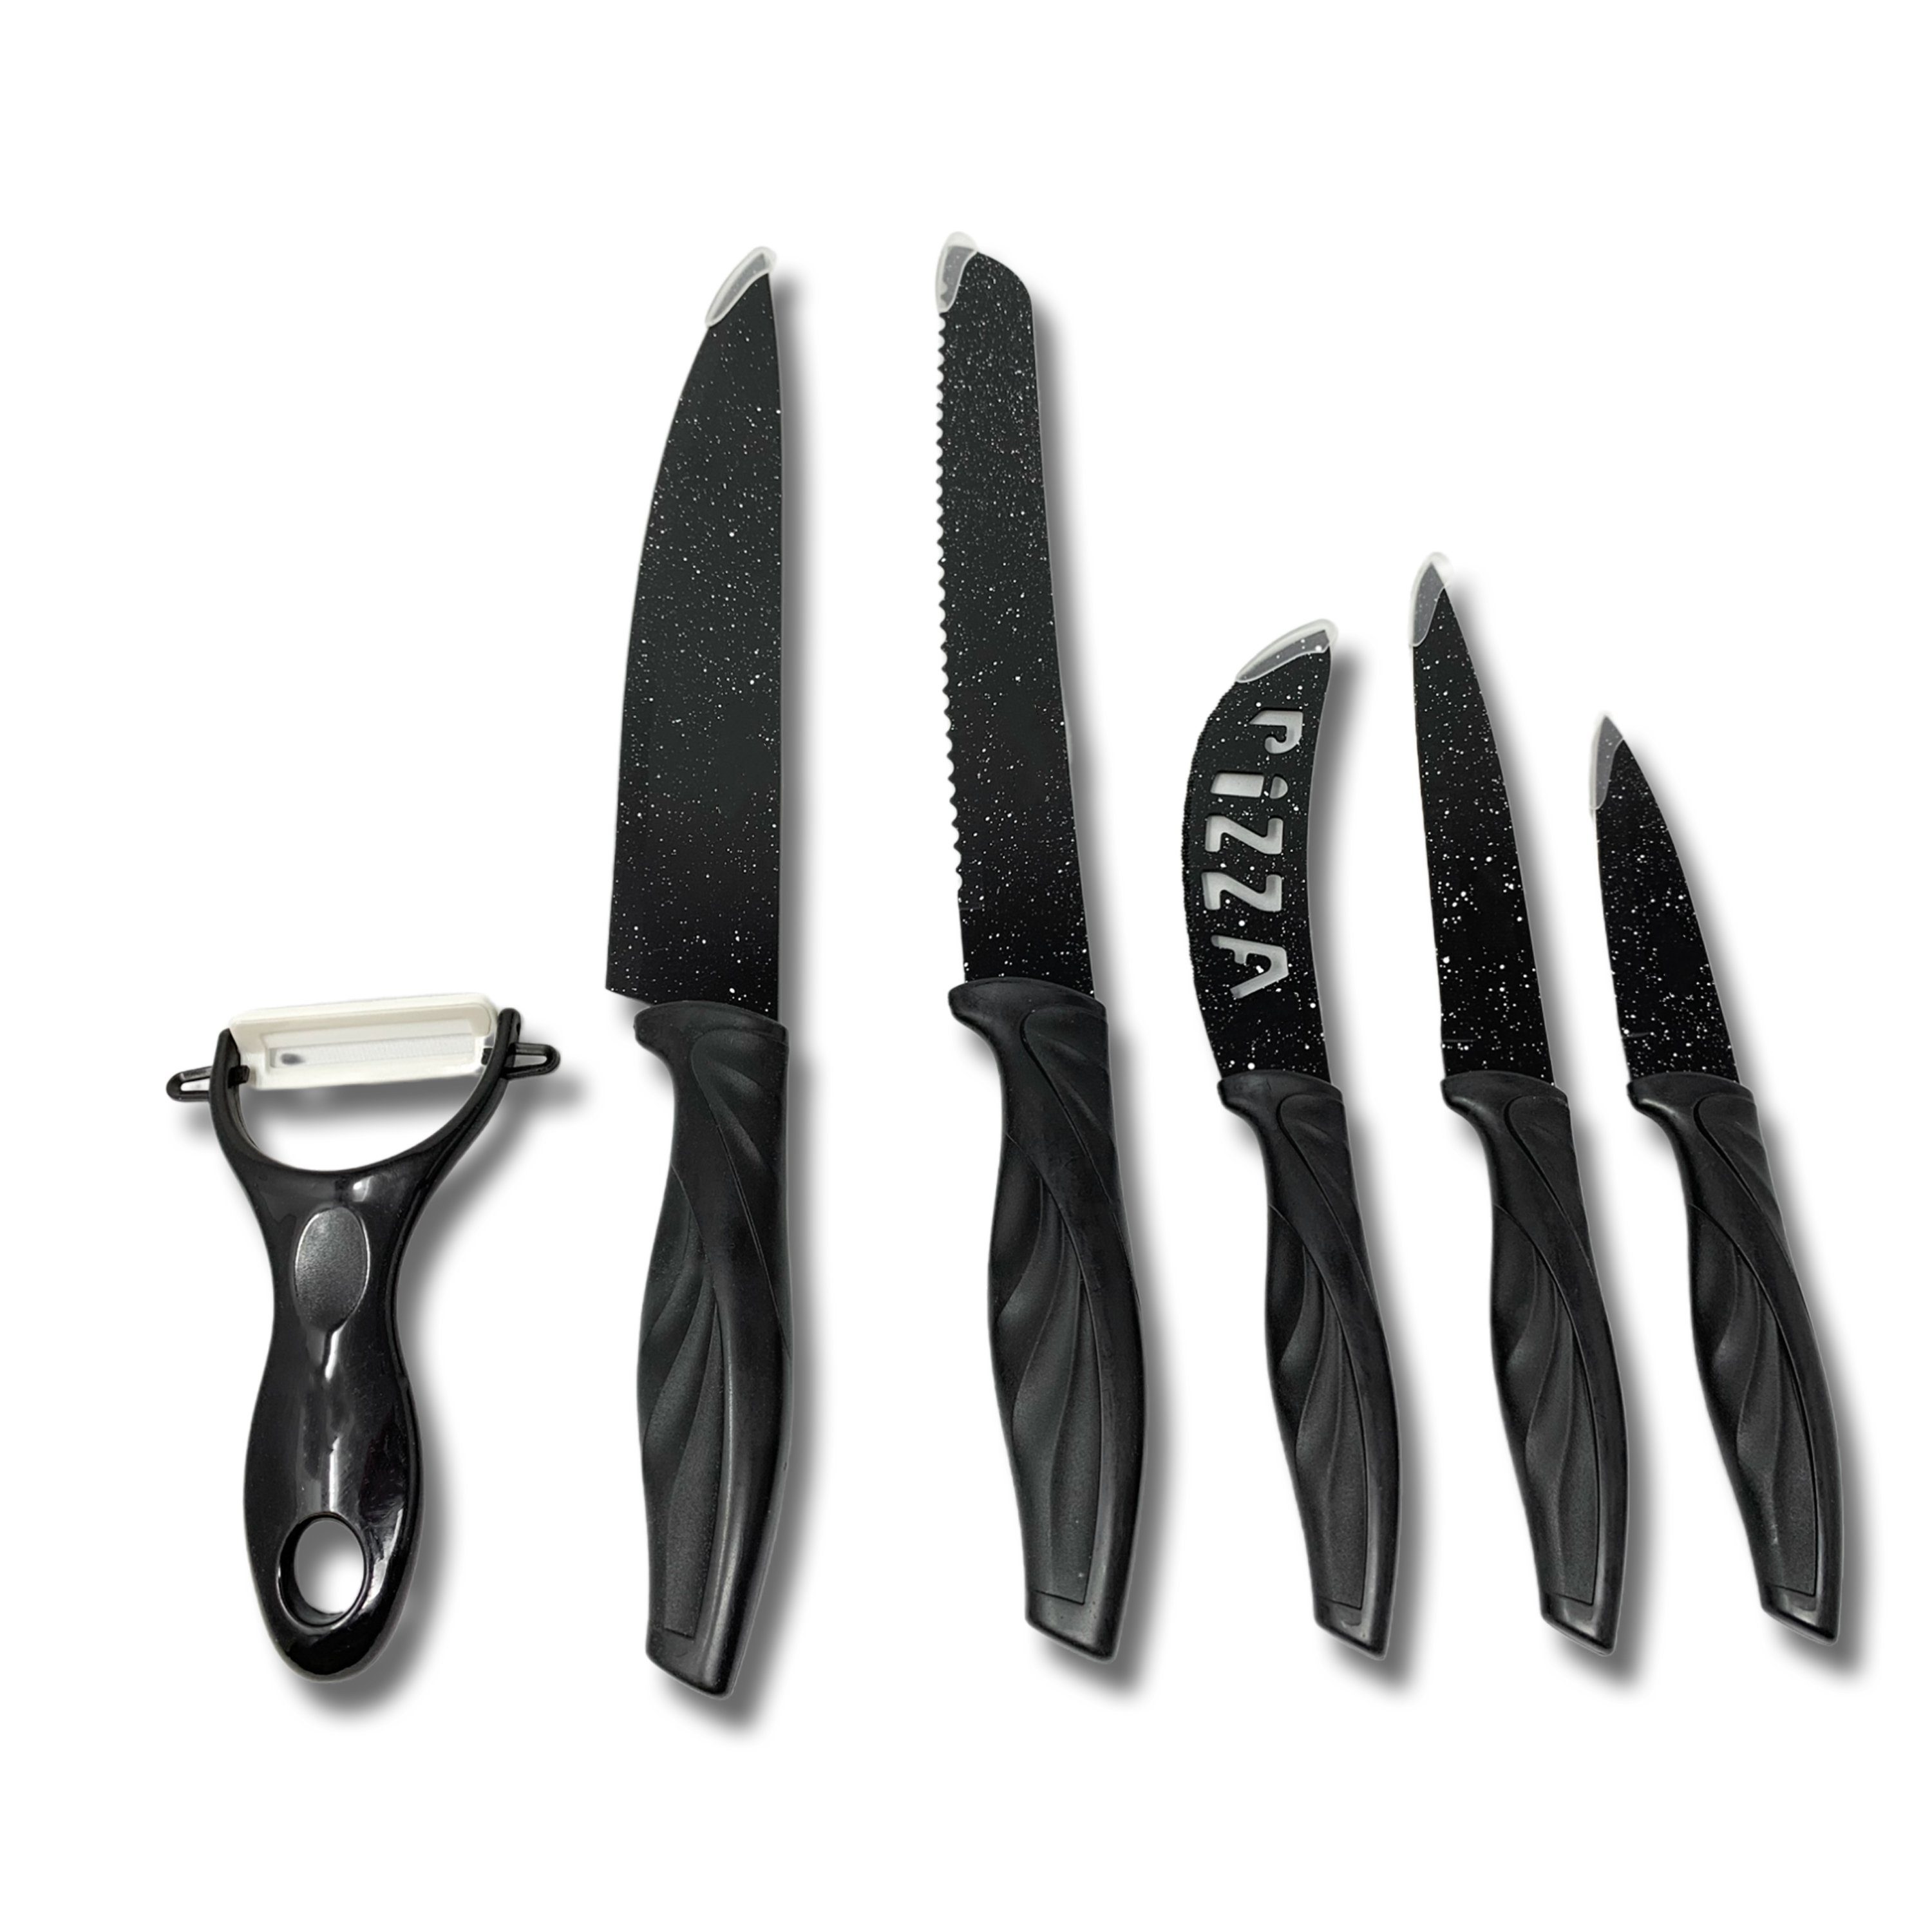 H-basics Messer-Set 6 teiliges Messerset - Kochmesser, Universalmesser, Brotmesser, Pizzamesser, Schälmesser, Antihaft Beschichtung, Marmor beschichtet Schwarz